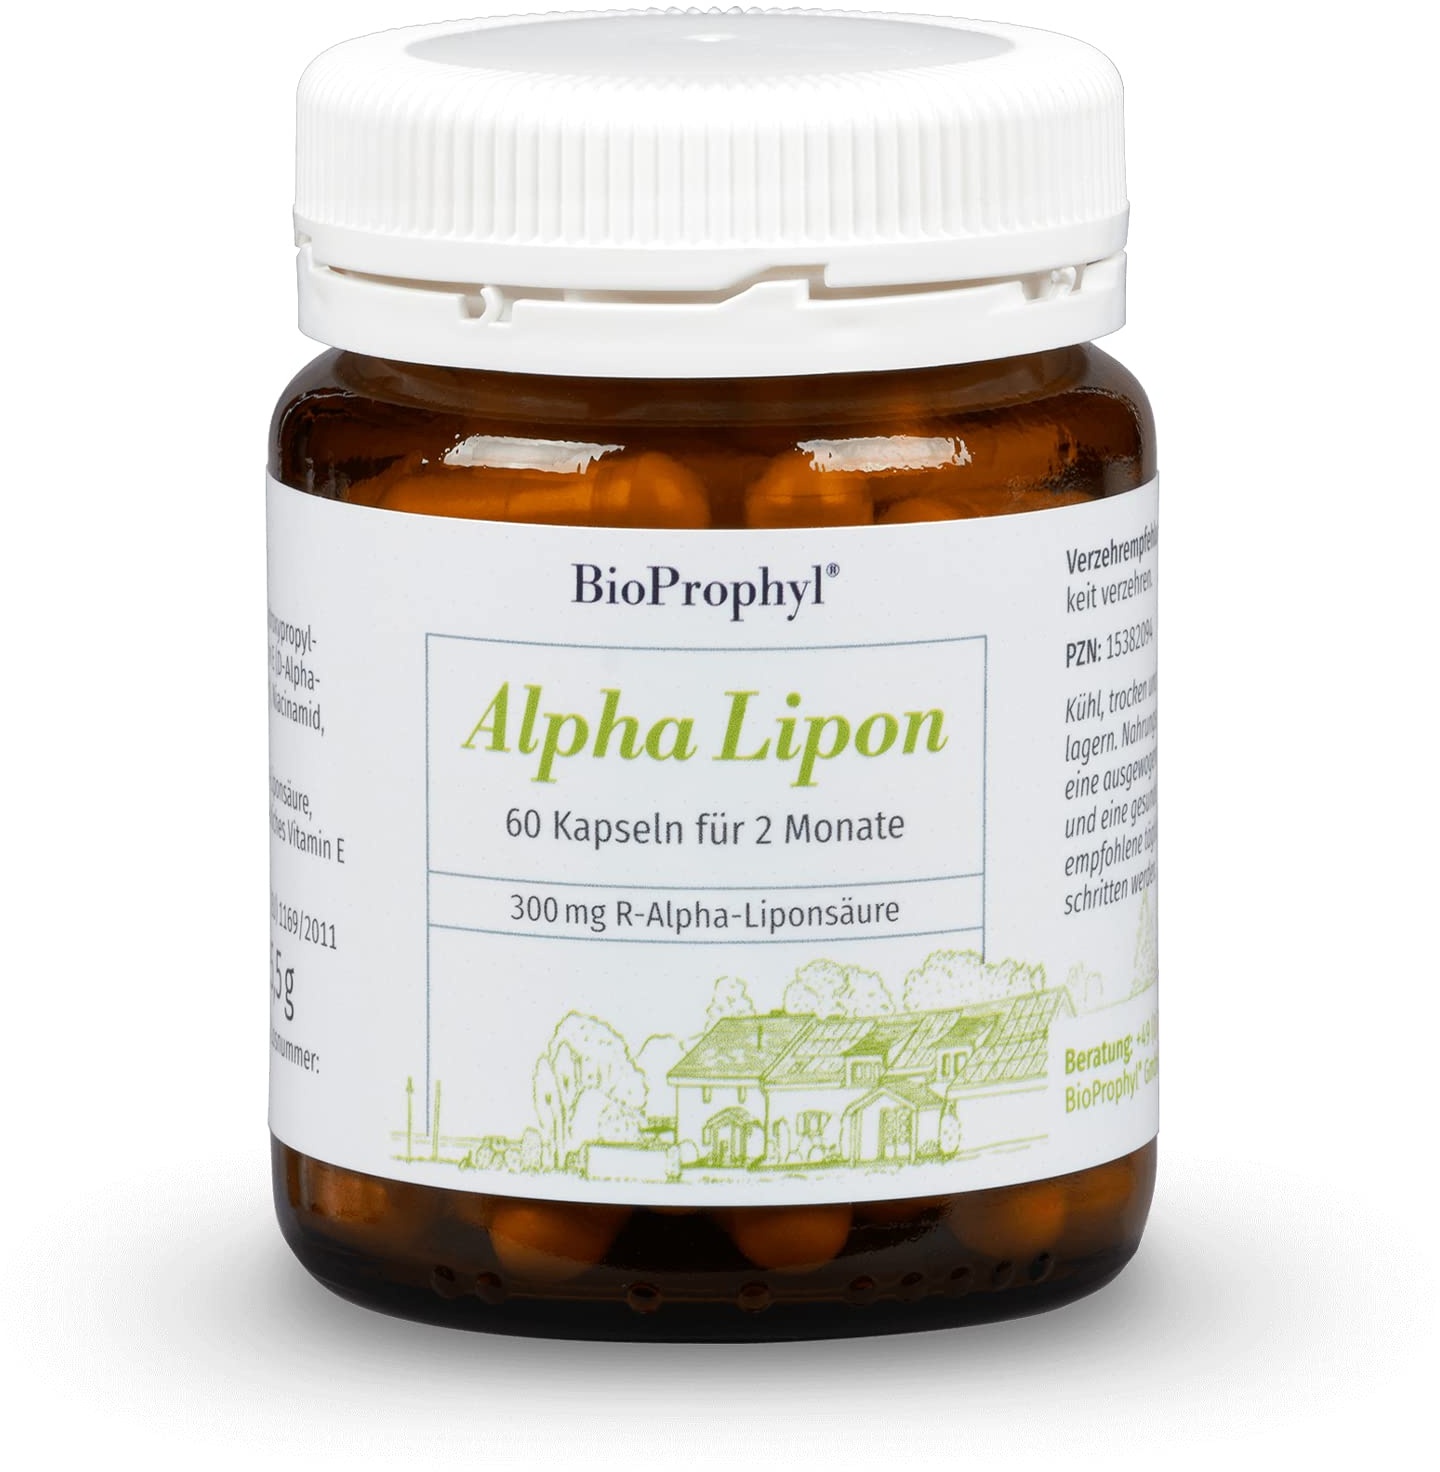 r-alpha-liponsure 300 mg